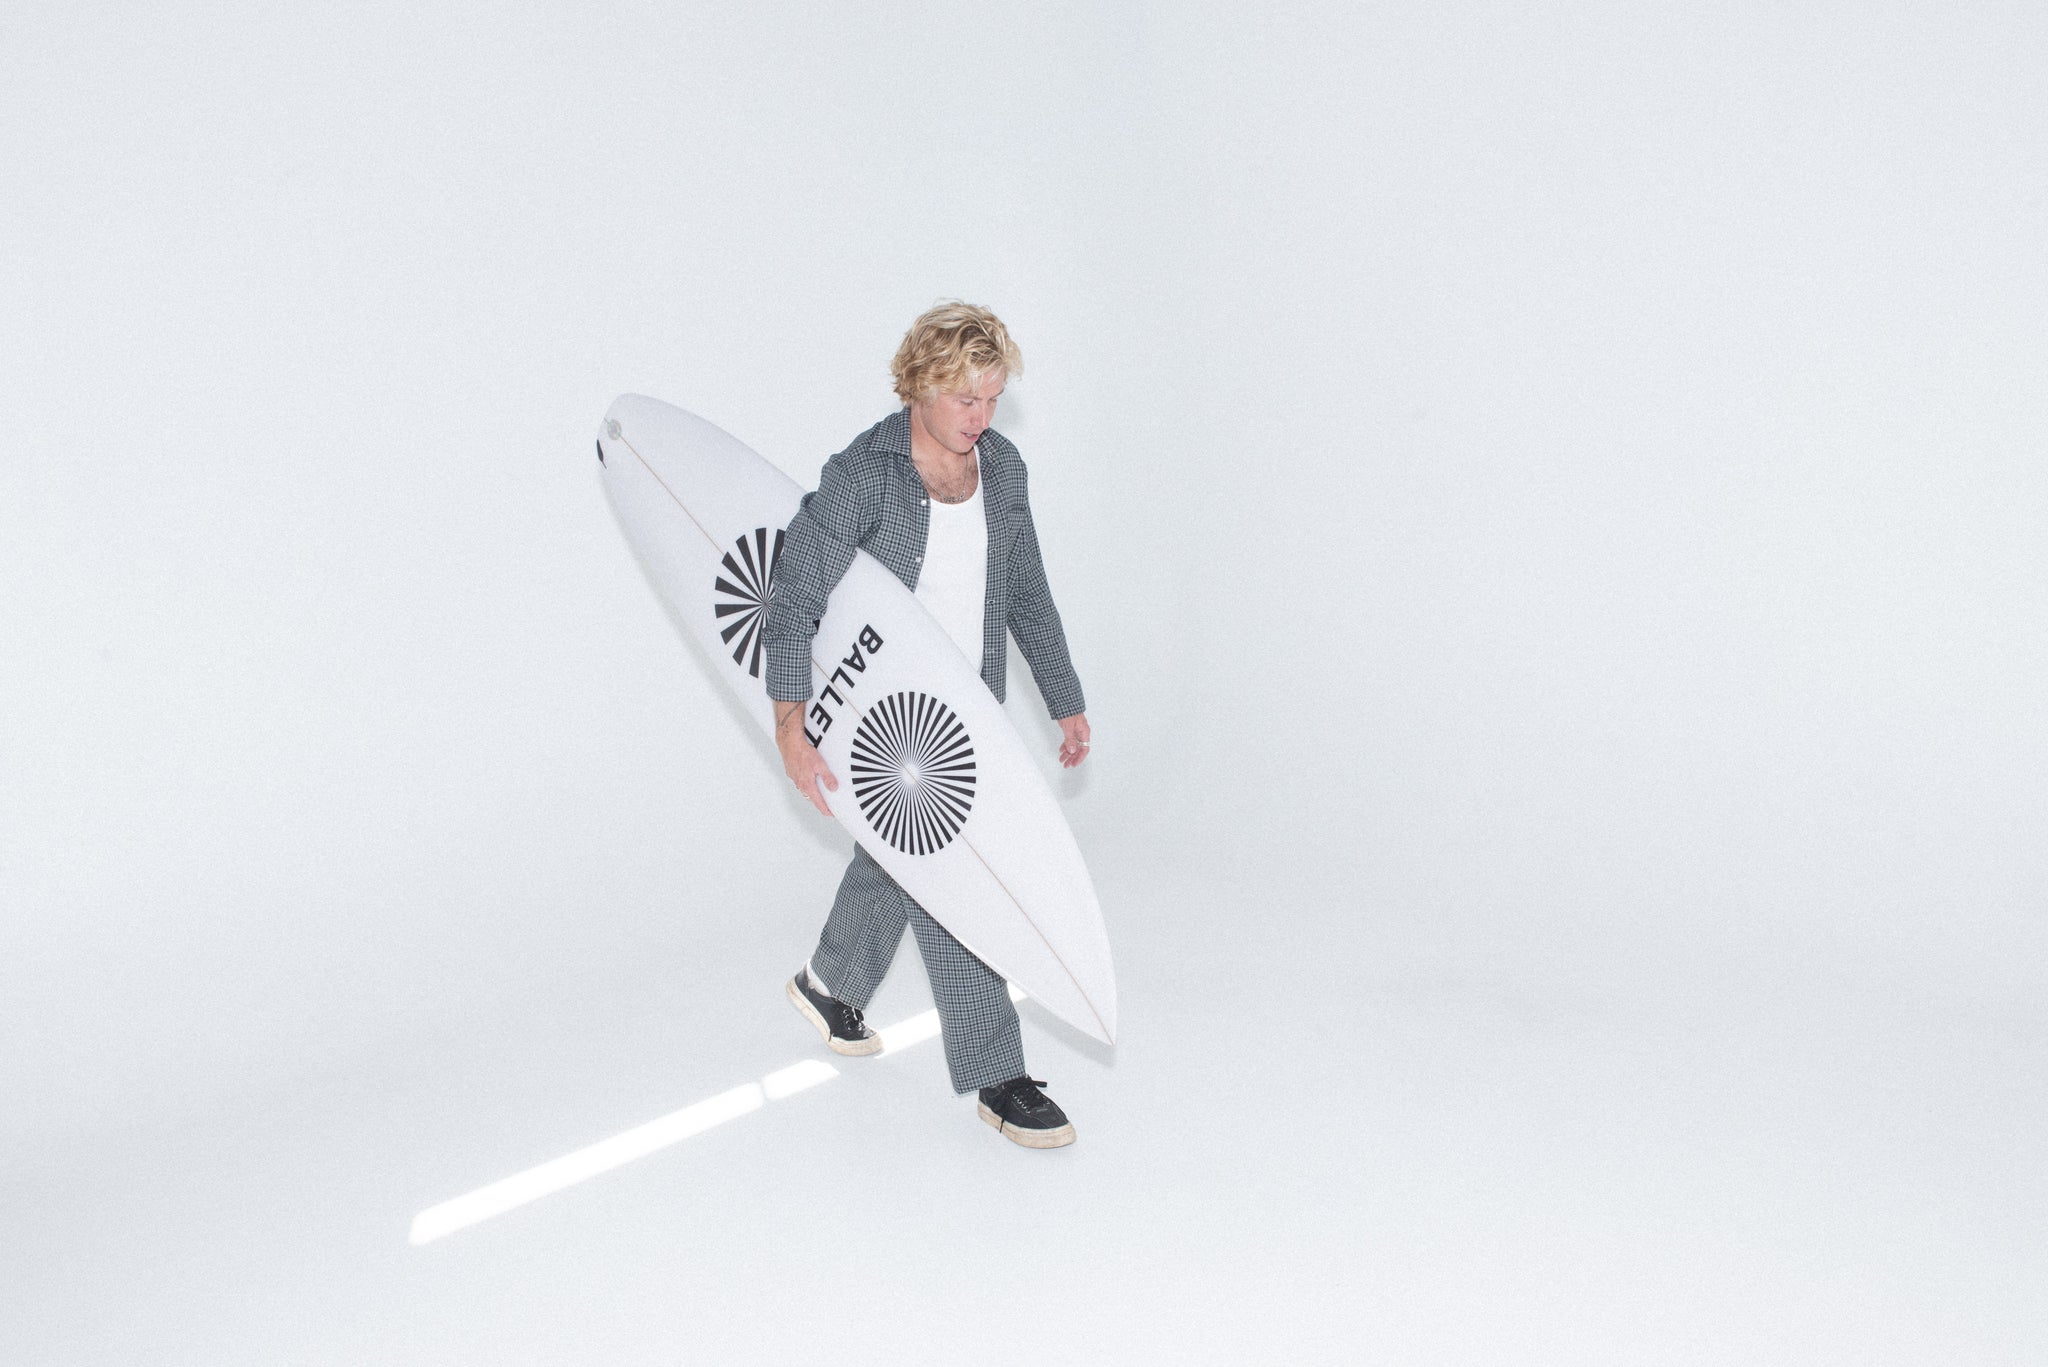 BALLET x PATRICK THOMAS SURFBOARD #002